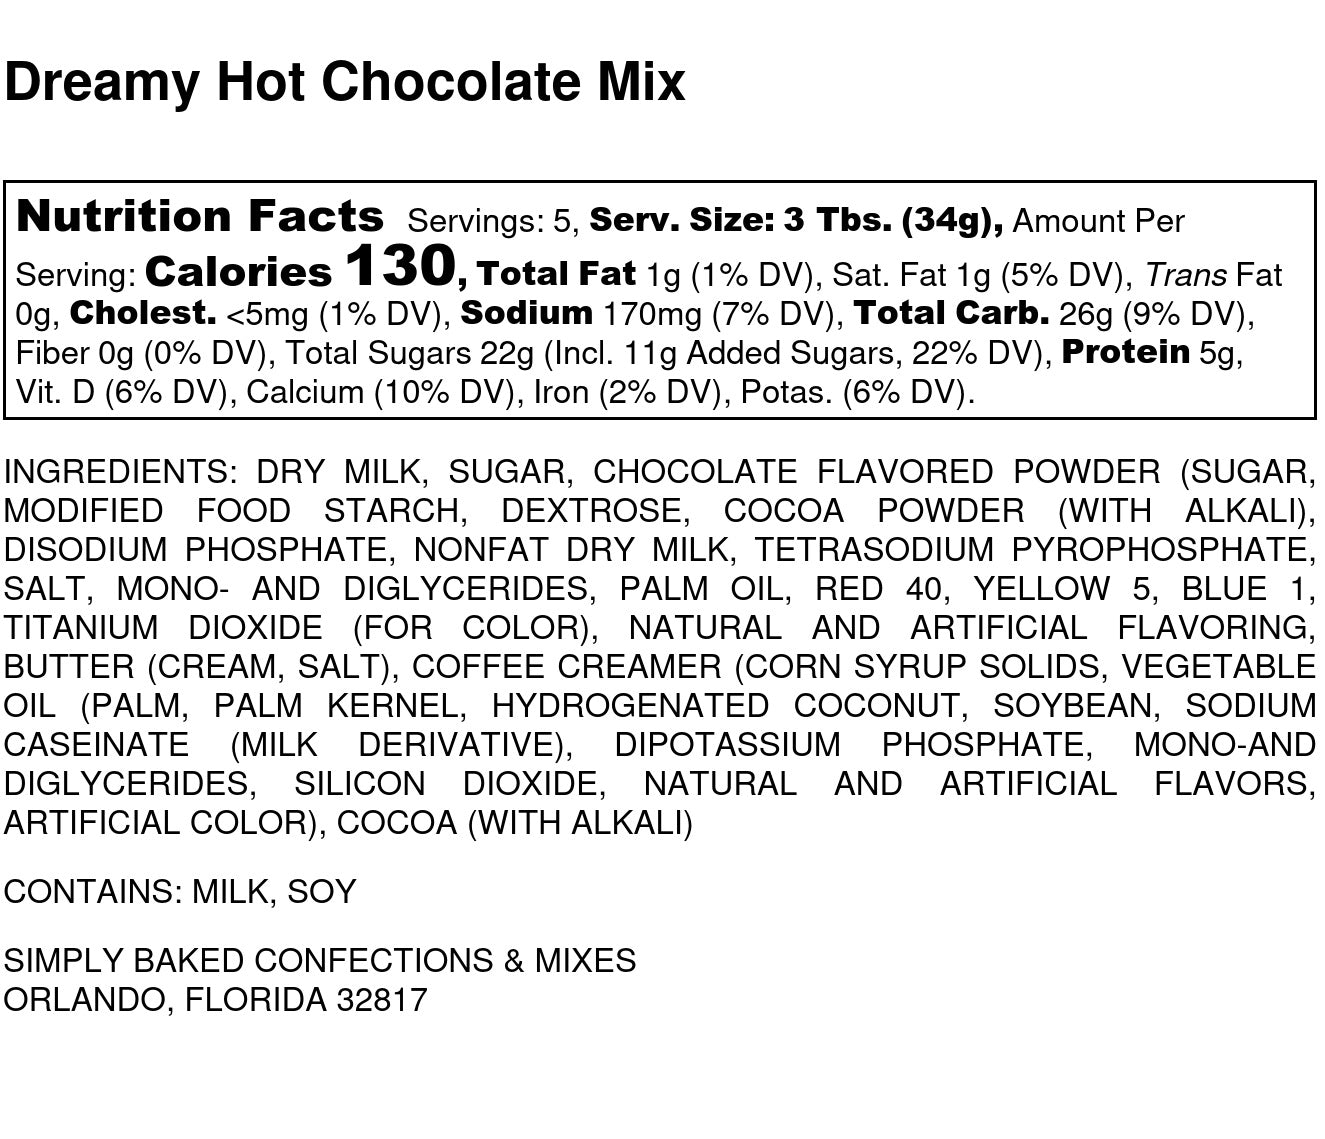 Dreamy Hot Chocolate Mix